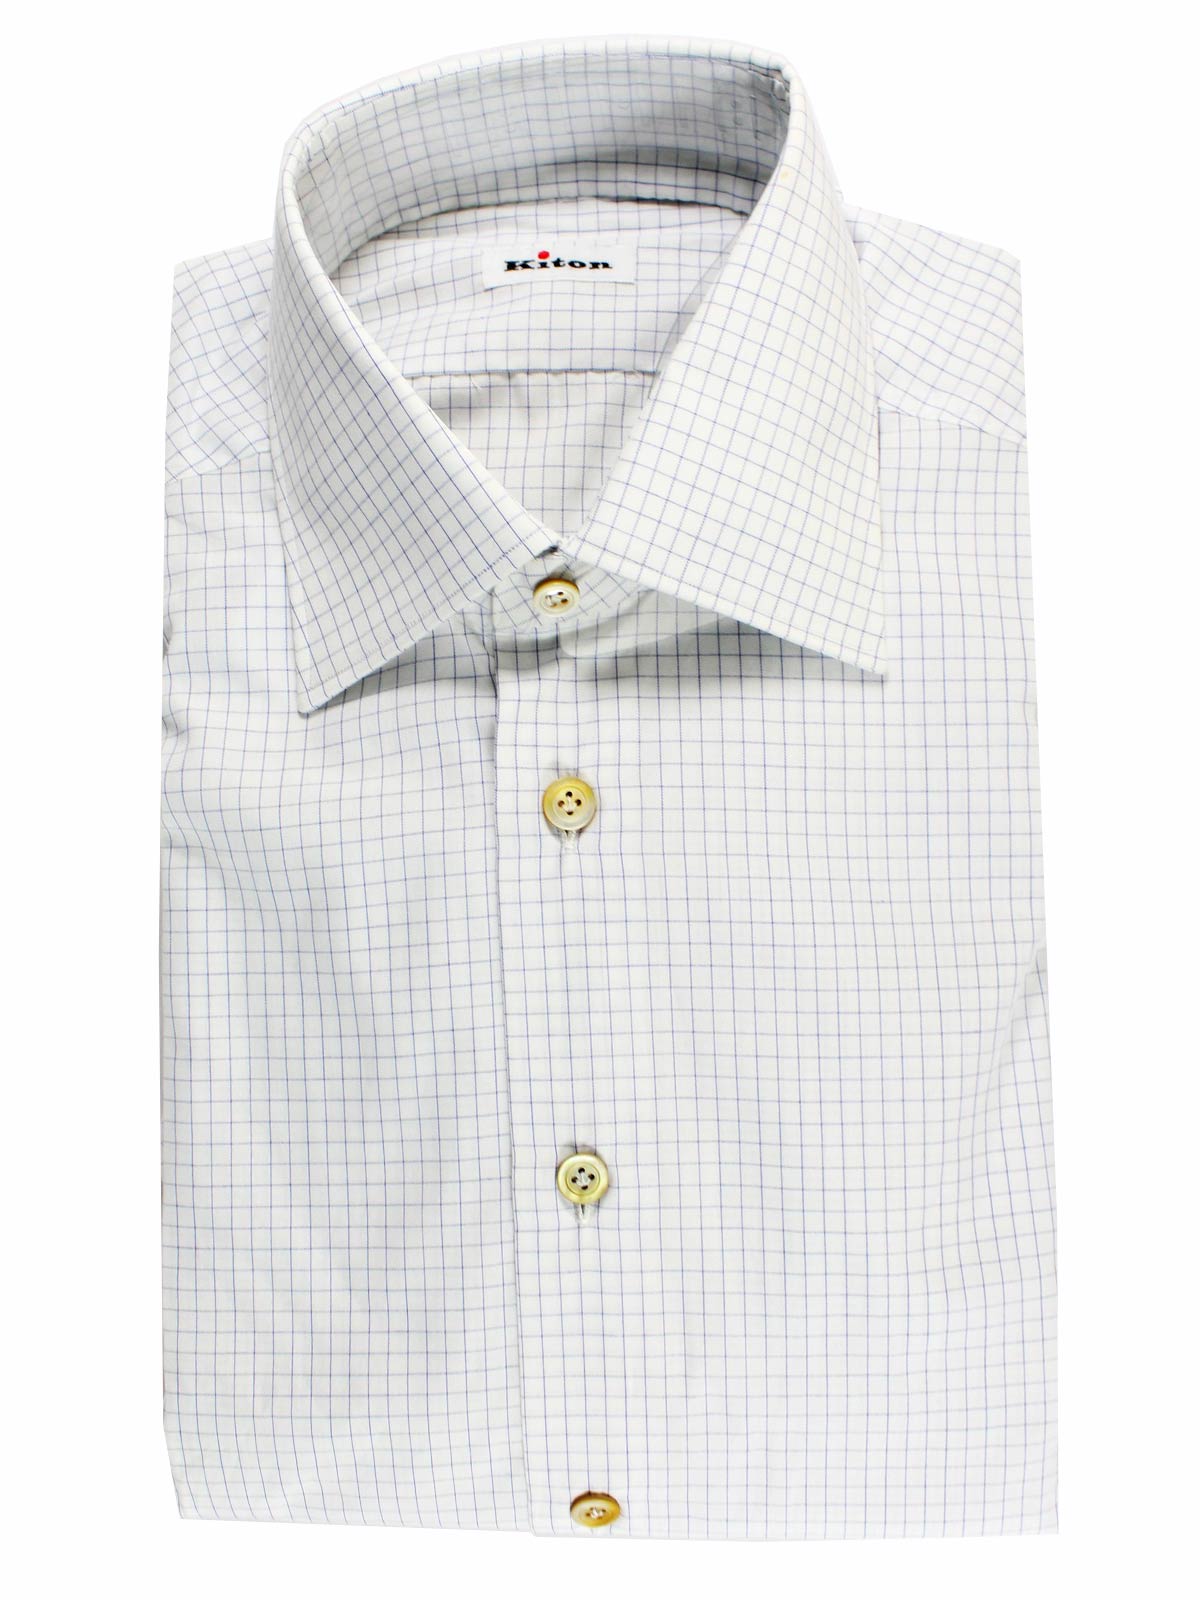 Kiton Dress Shirt White Navy Graph Check 39 - 15 1/2 SALE - Tie Deals